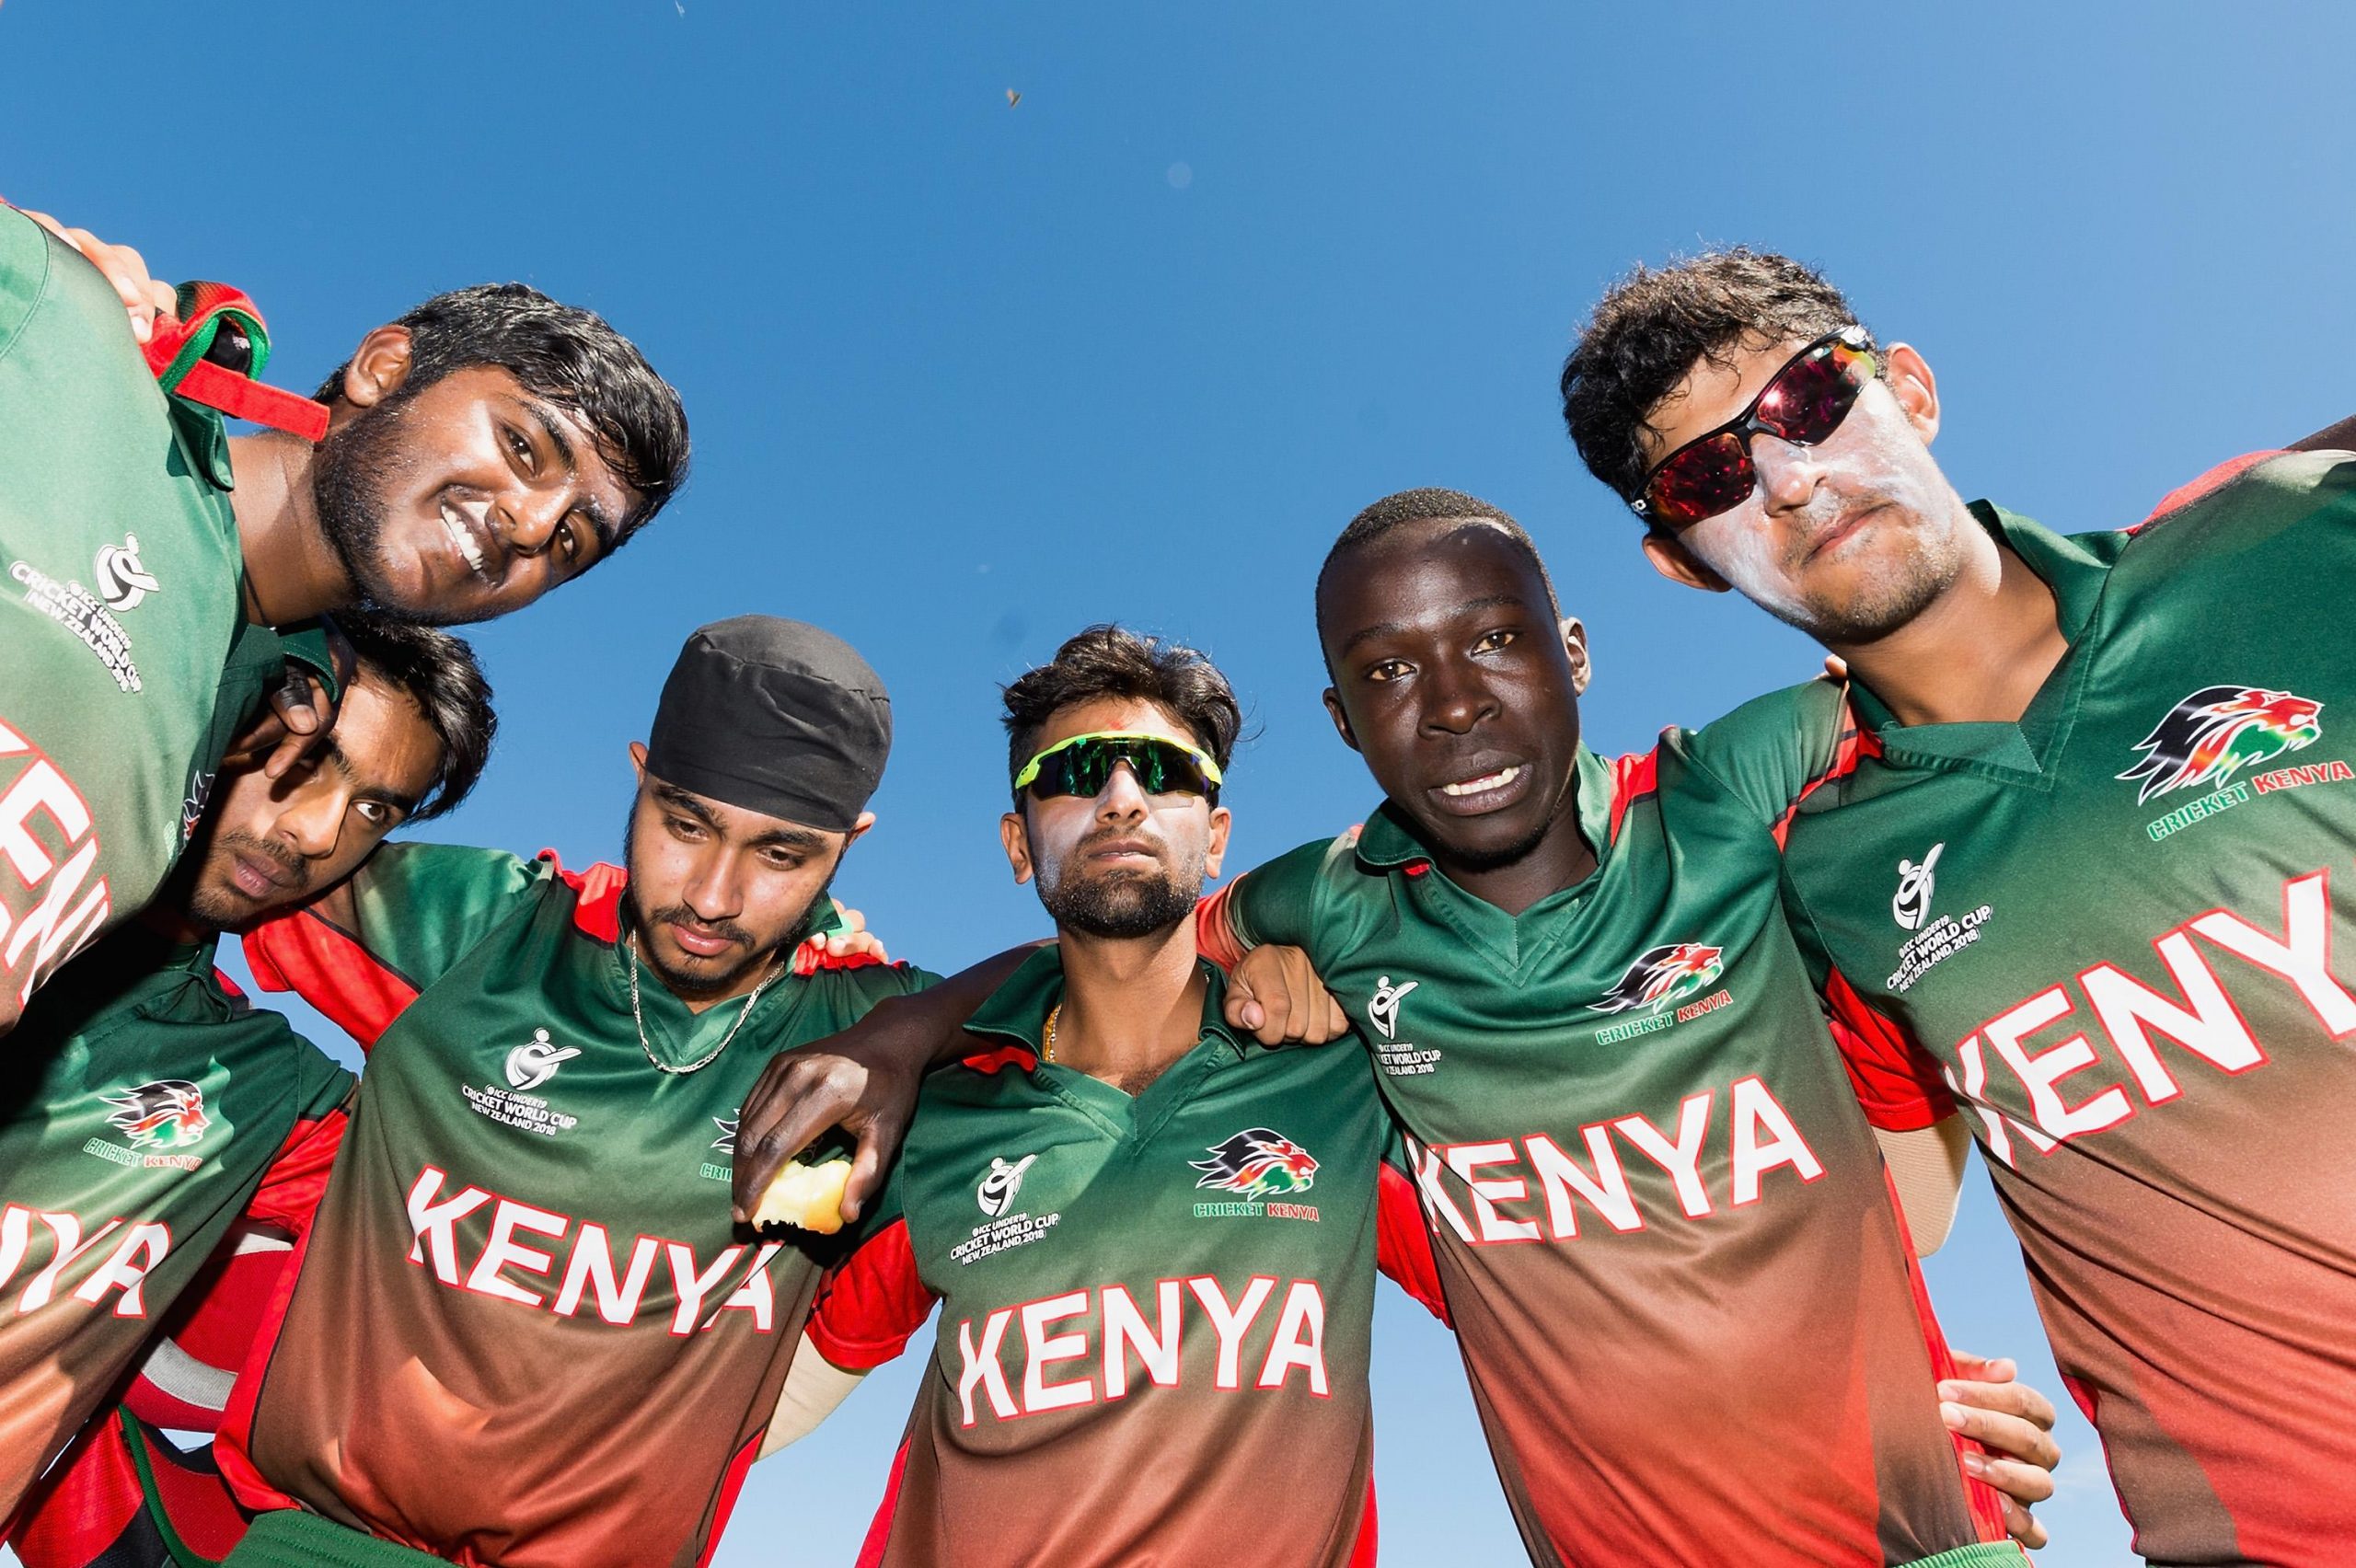 kenya cricket team jersey